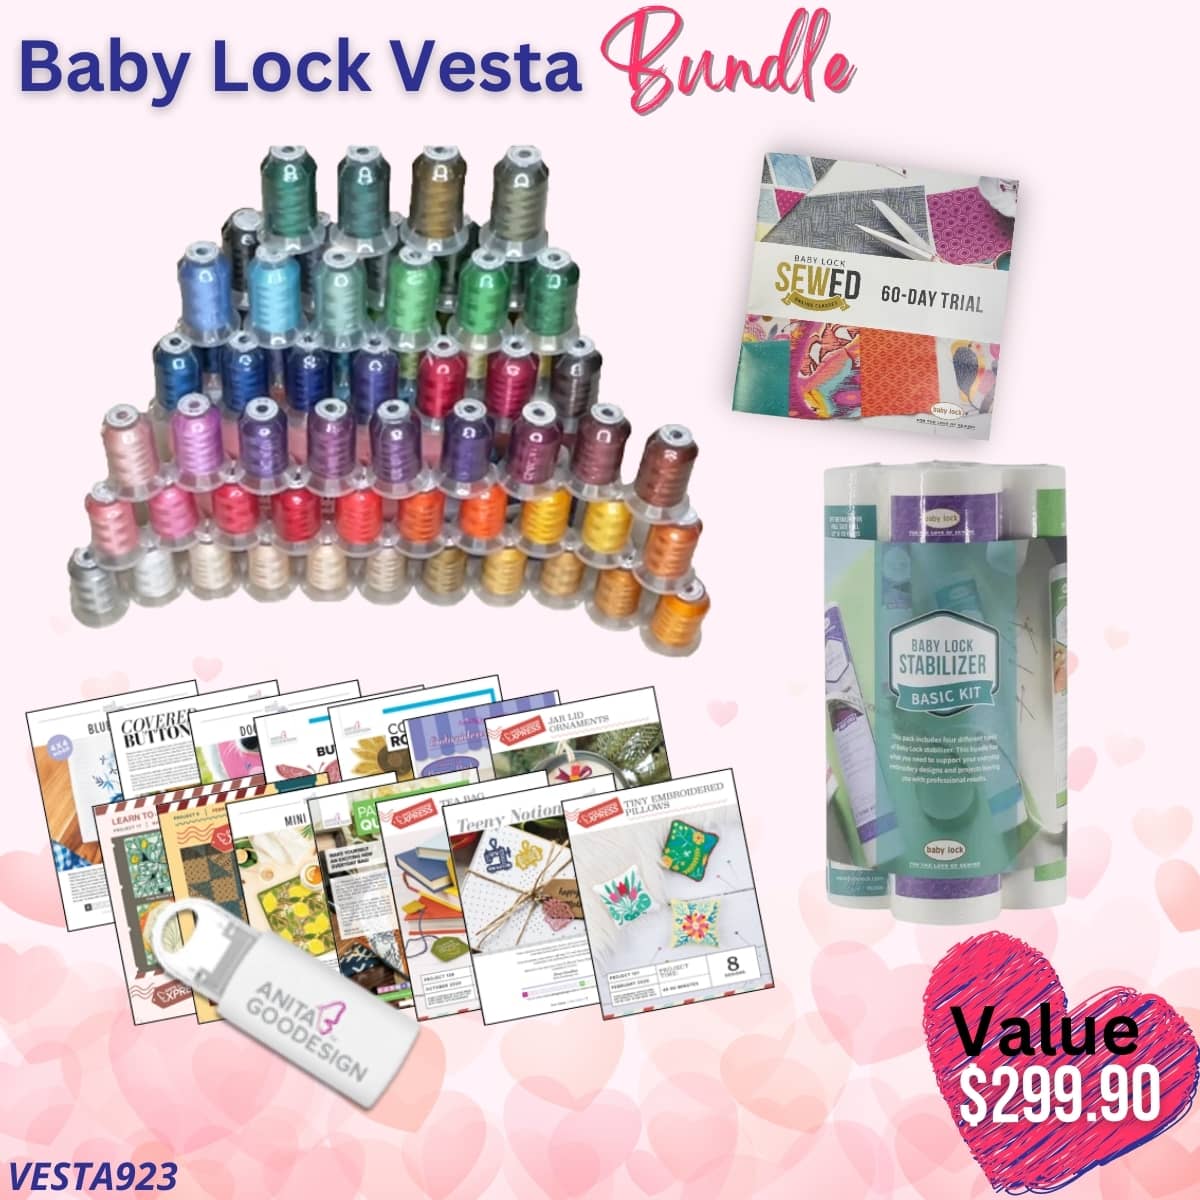 Baby Lock Vesta bundle for Valentine's Sale